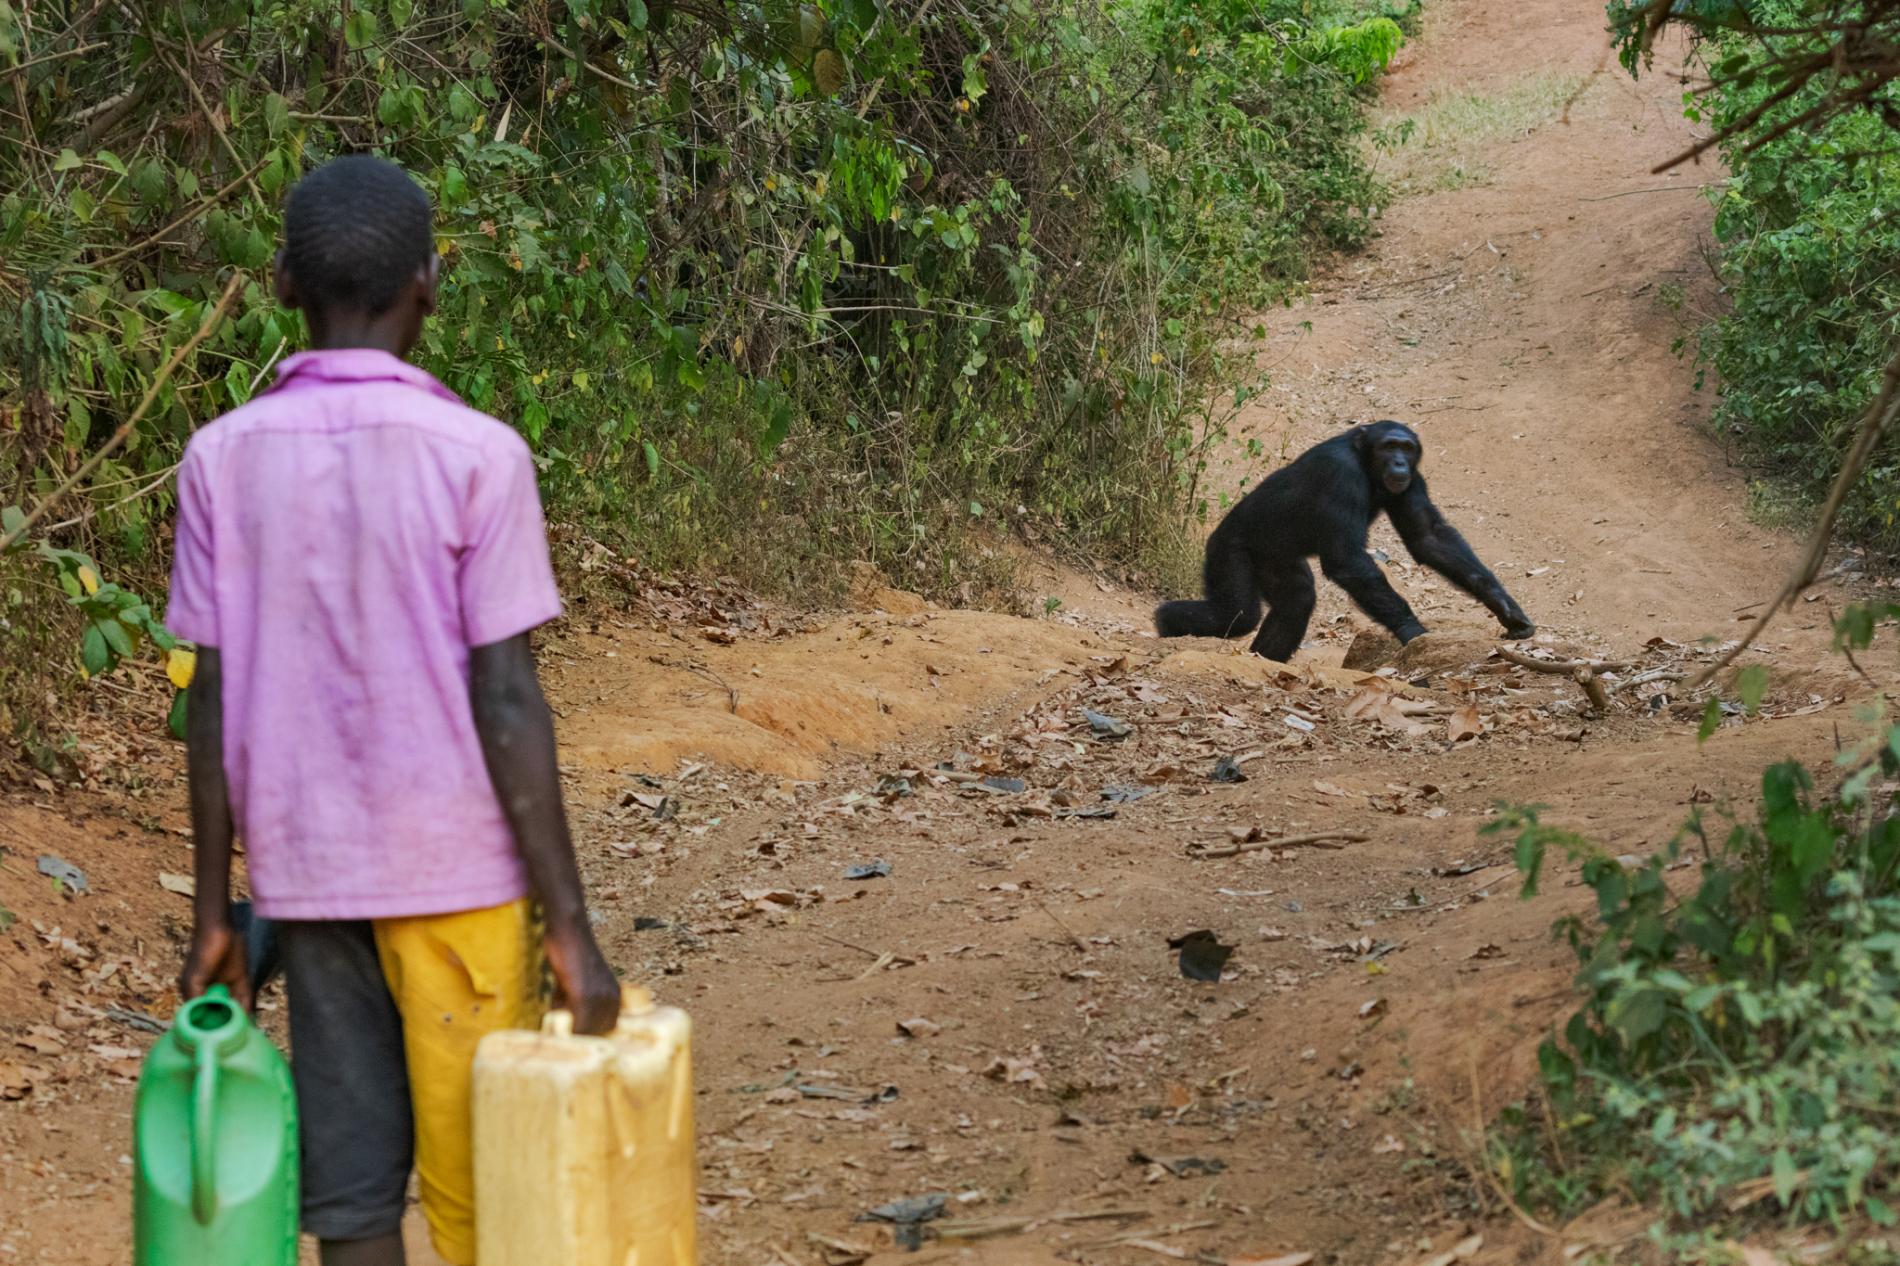 Chimpanzee in Rural Uganda